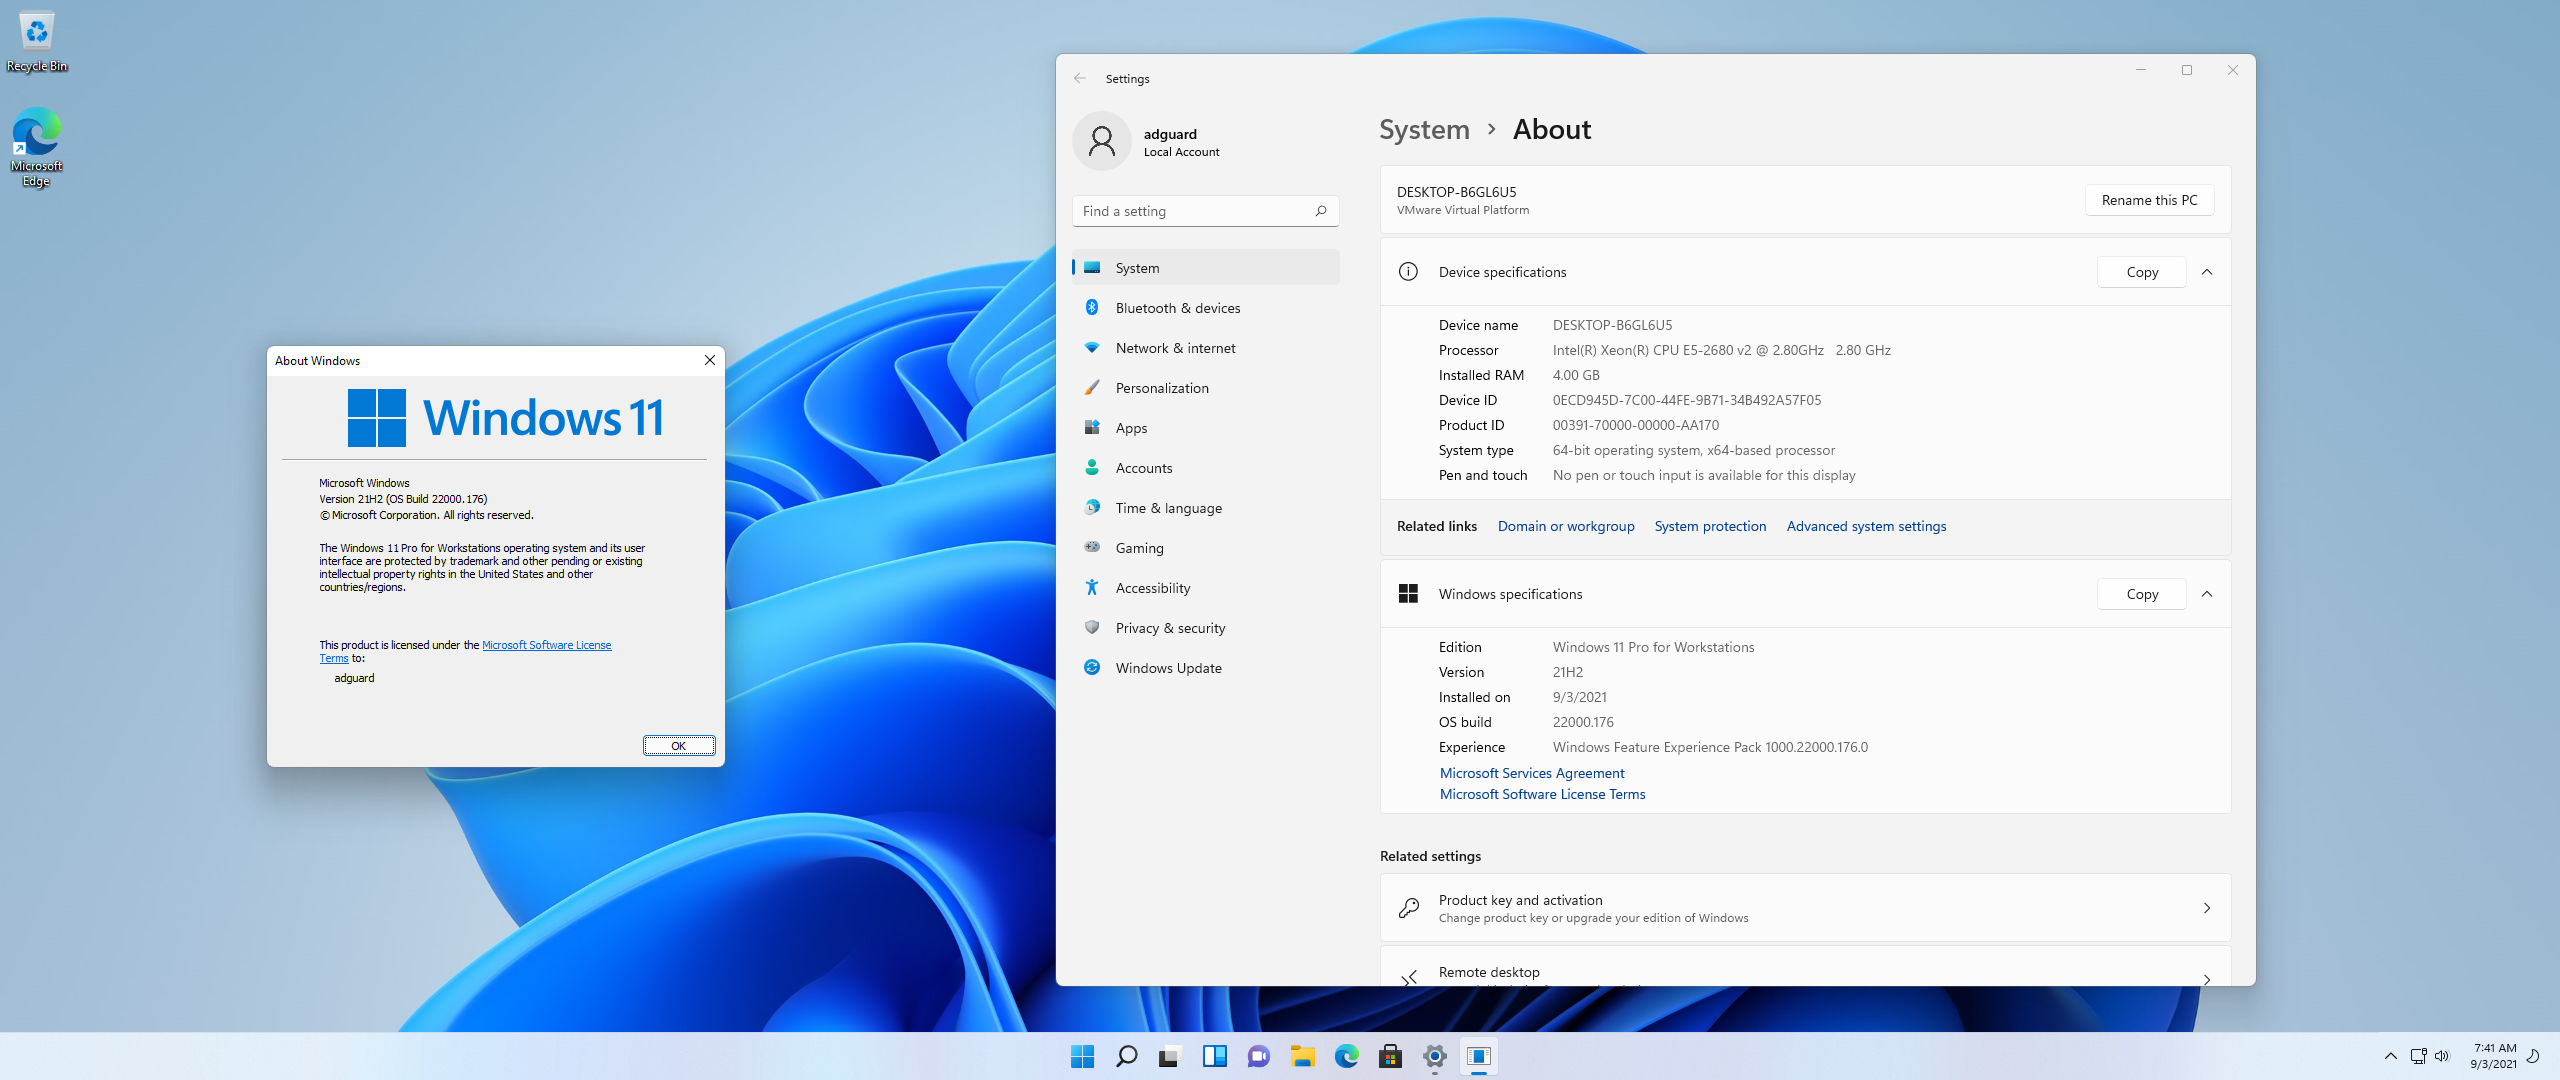 Виндовс 11 расширения файлов. Виндовс 11. Виндовс 11 система. Новая версия Windows. Windows 11 характеристики.